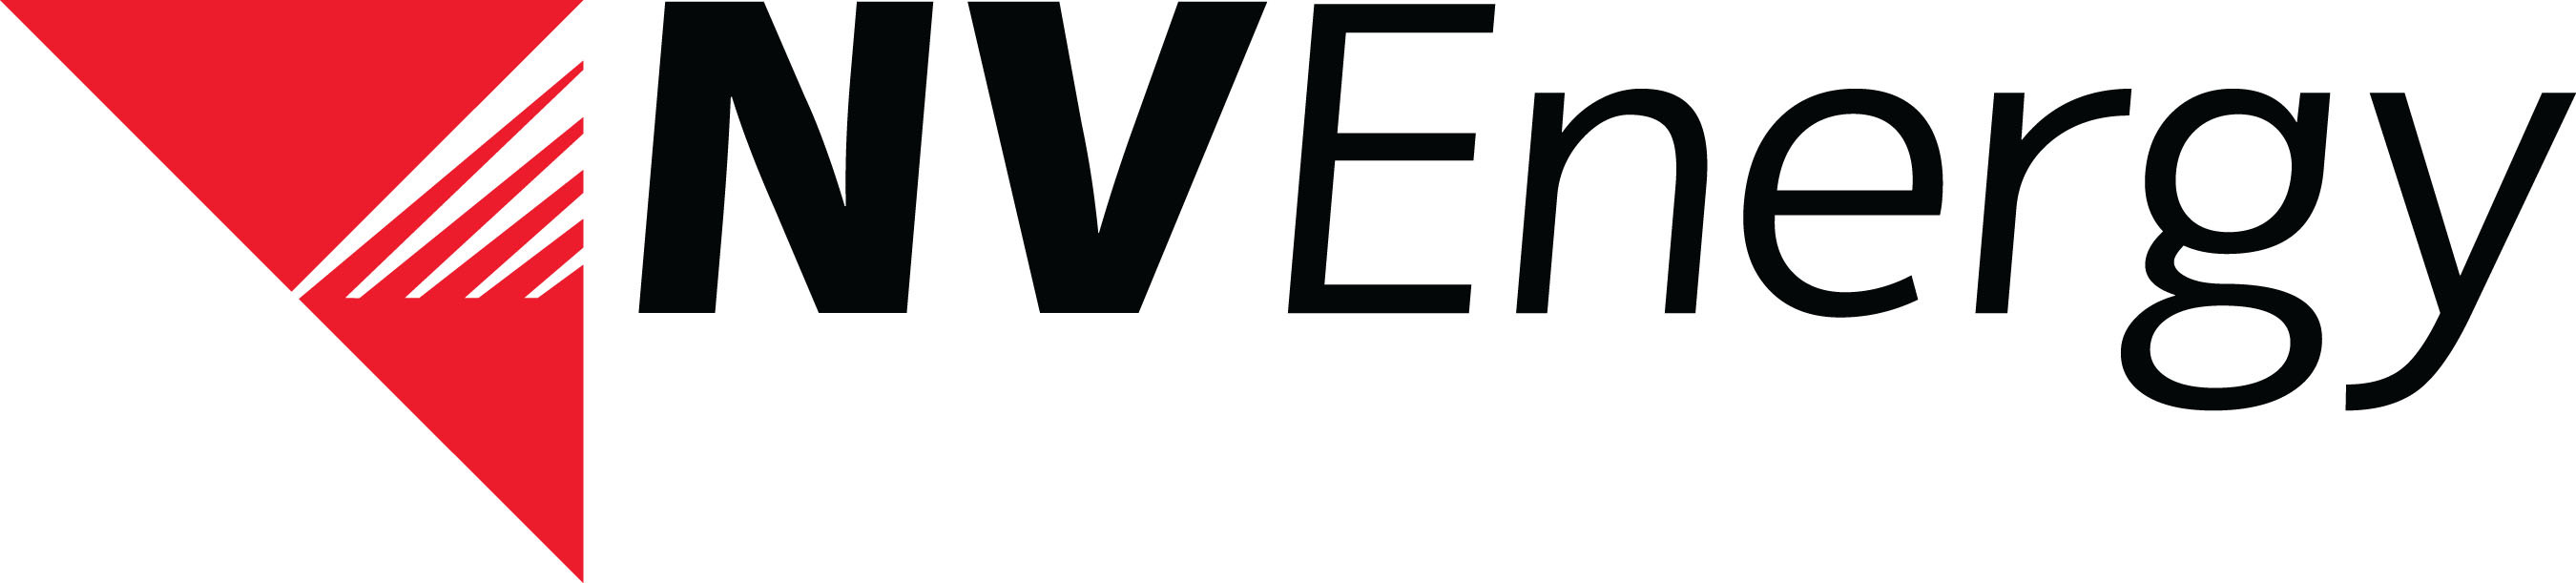 NV Energy logo. (PRNewsFoto/NV Energy, Inc.) (PRNewsFoto/)